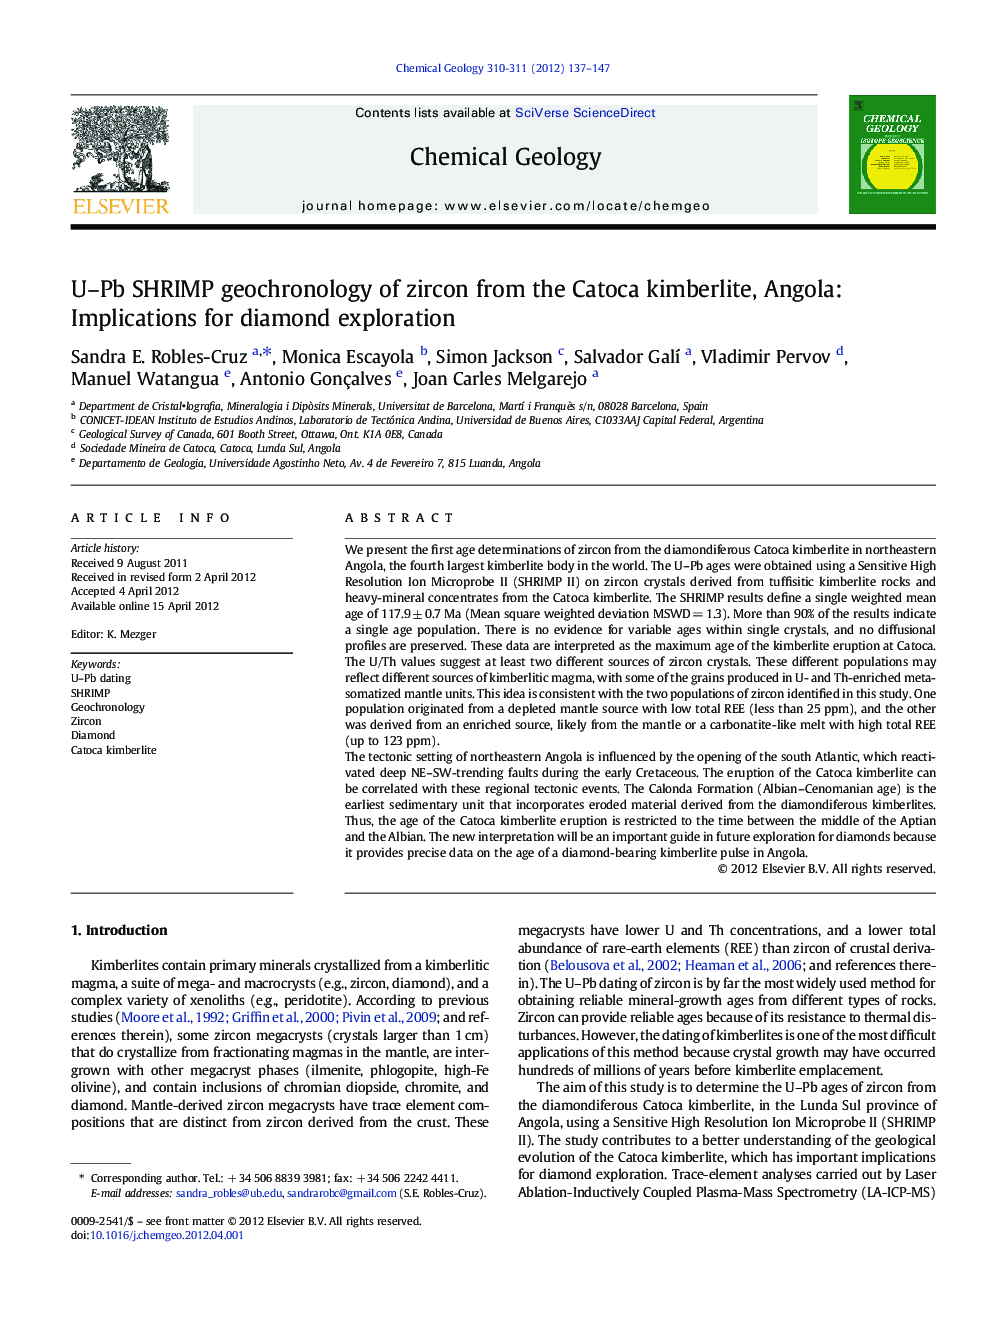 U–Pb SHRIMP geochronology of zircon from the Catoca kimberlite, Angola: Implications for diamond exploration